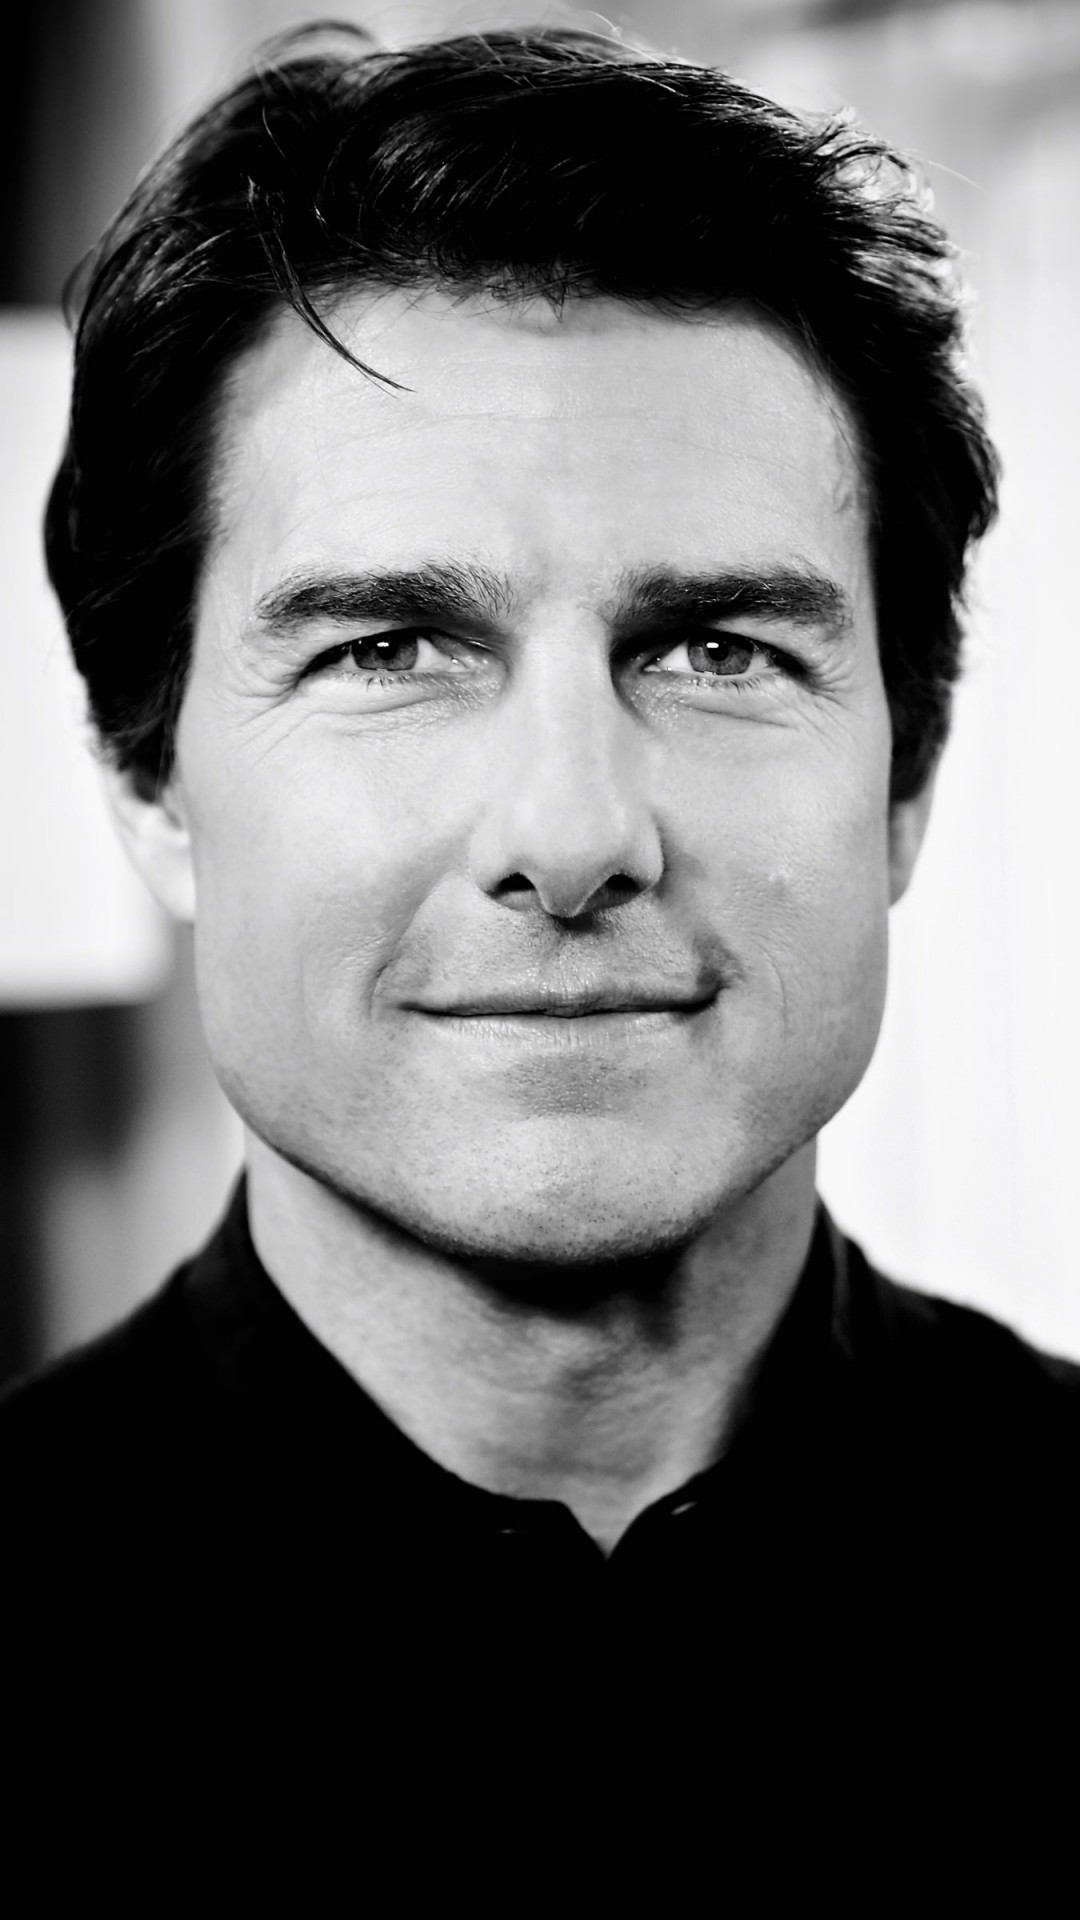 Tom Cruise Black & White Portrait Wallpaper for Google Nexus 5